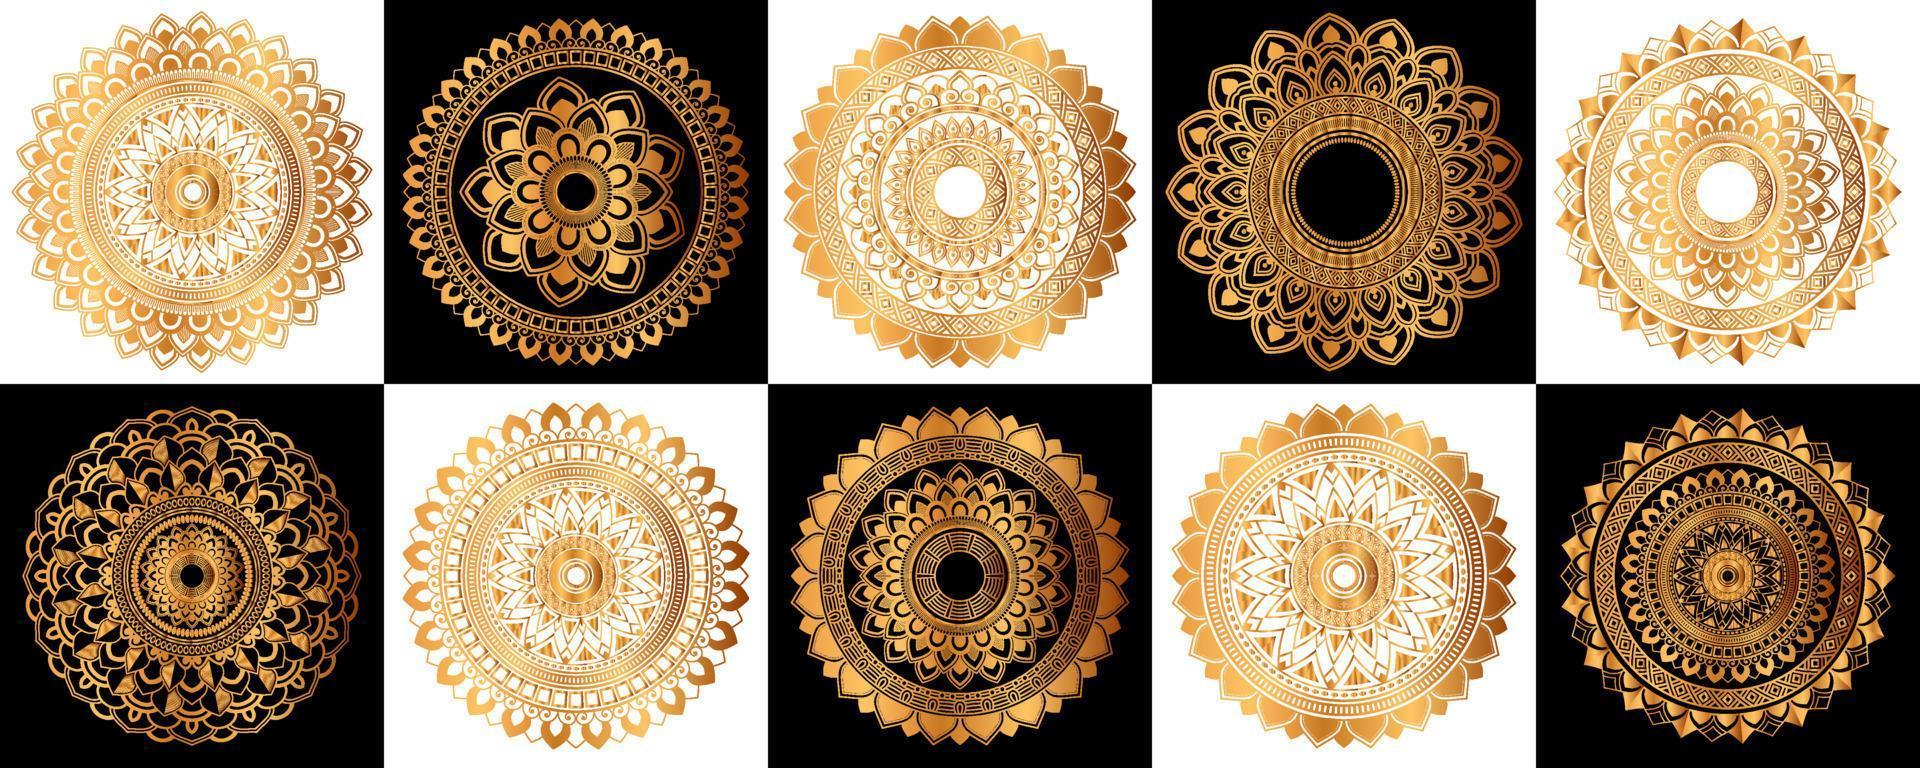 conjunto de mandalas zentangle dorados, mandala para henna, mehendi, tatuaje, elementos ornamentales étnicos decorativos, motivos orientales vector